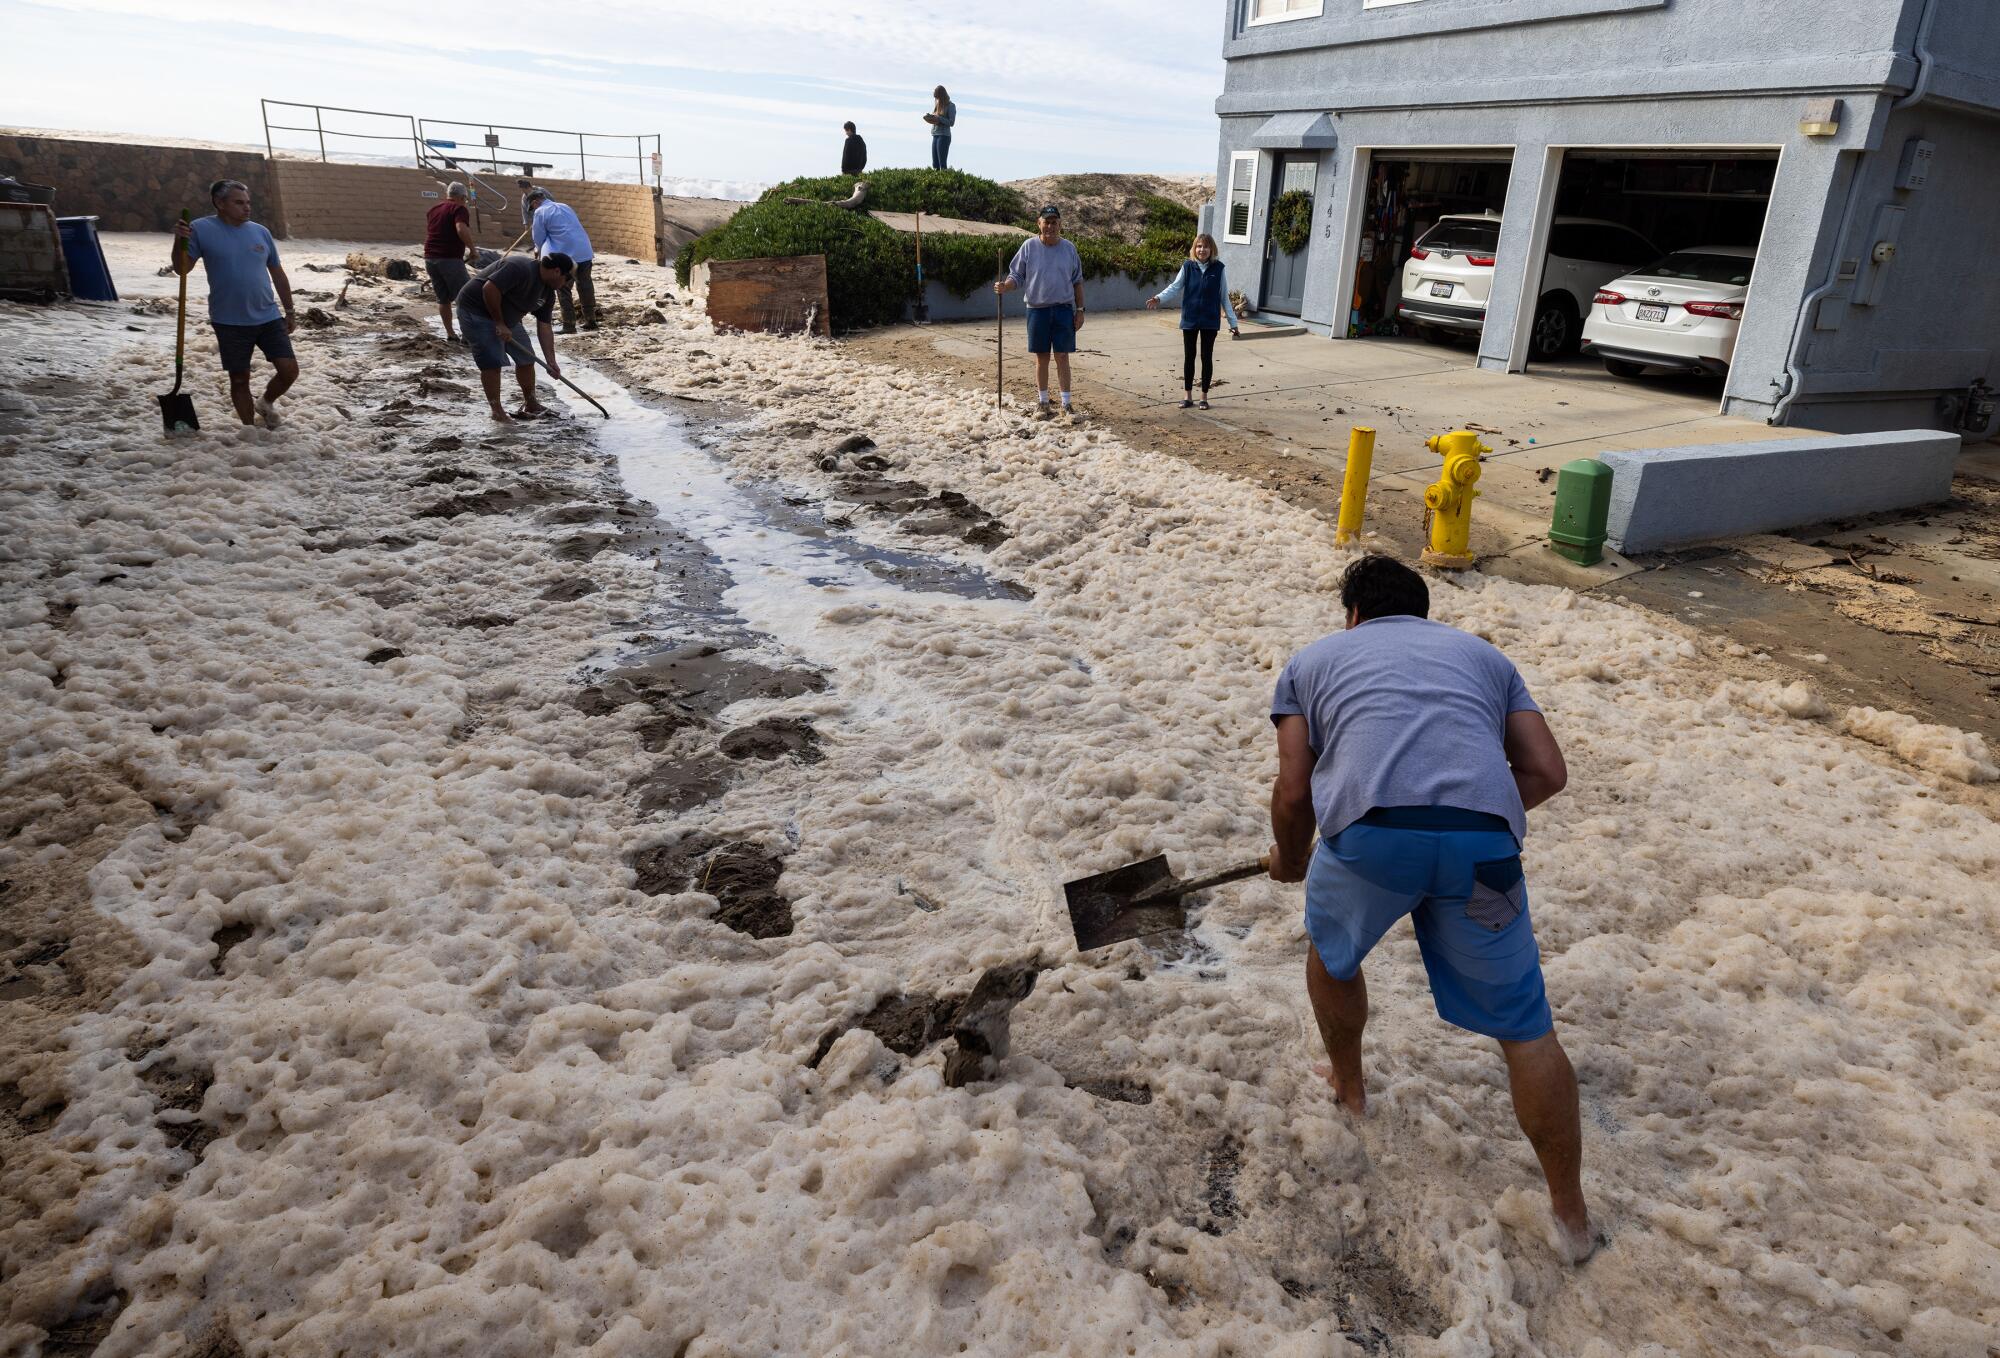 Pierpont neighbors help shovel sand on Bath Lane to help water drain in Ventura.